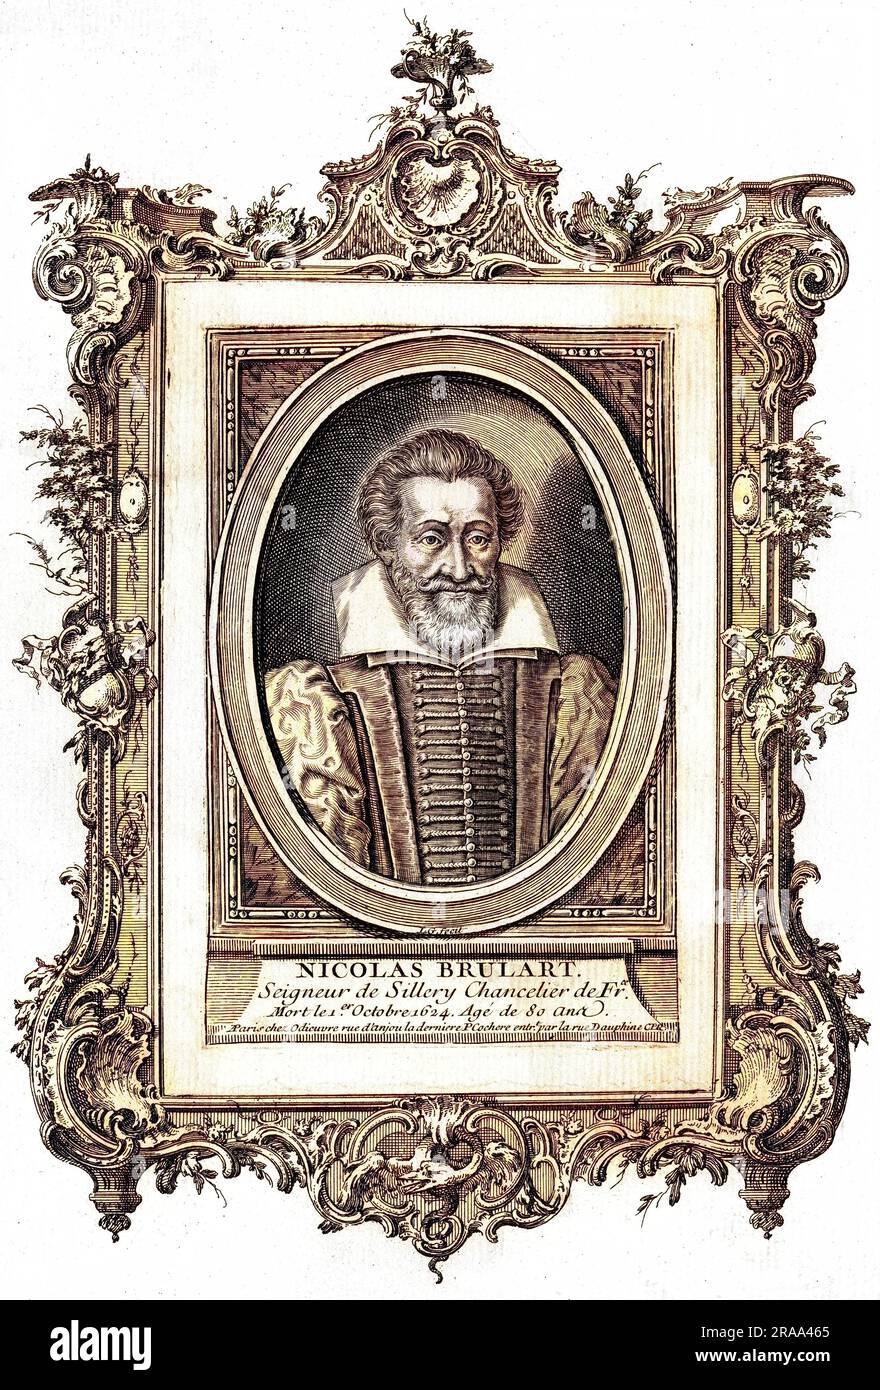 NICOLAS BRULART, marquis de SILLERY French statesman, chancelier de France.     Date: 1544 - 1624 Stock Photo